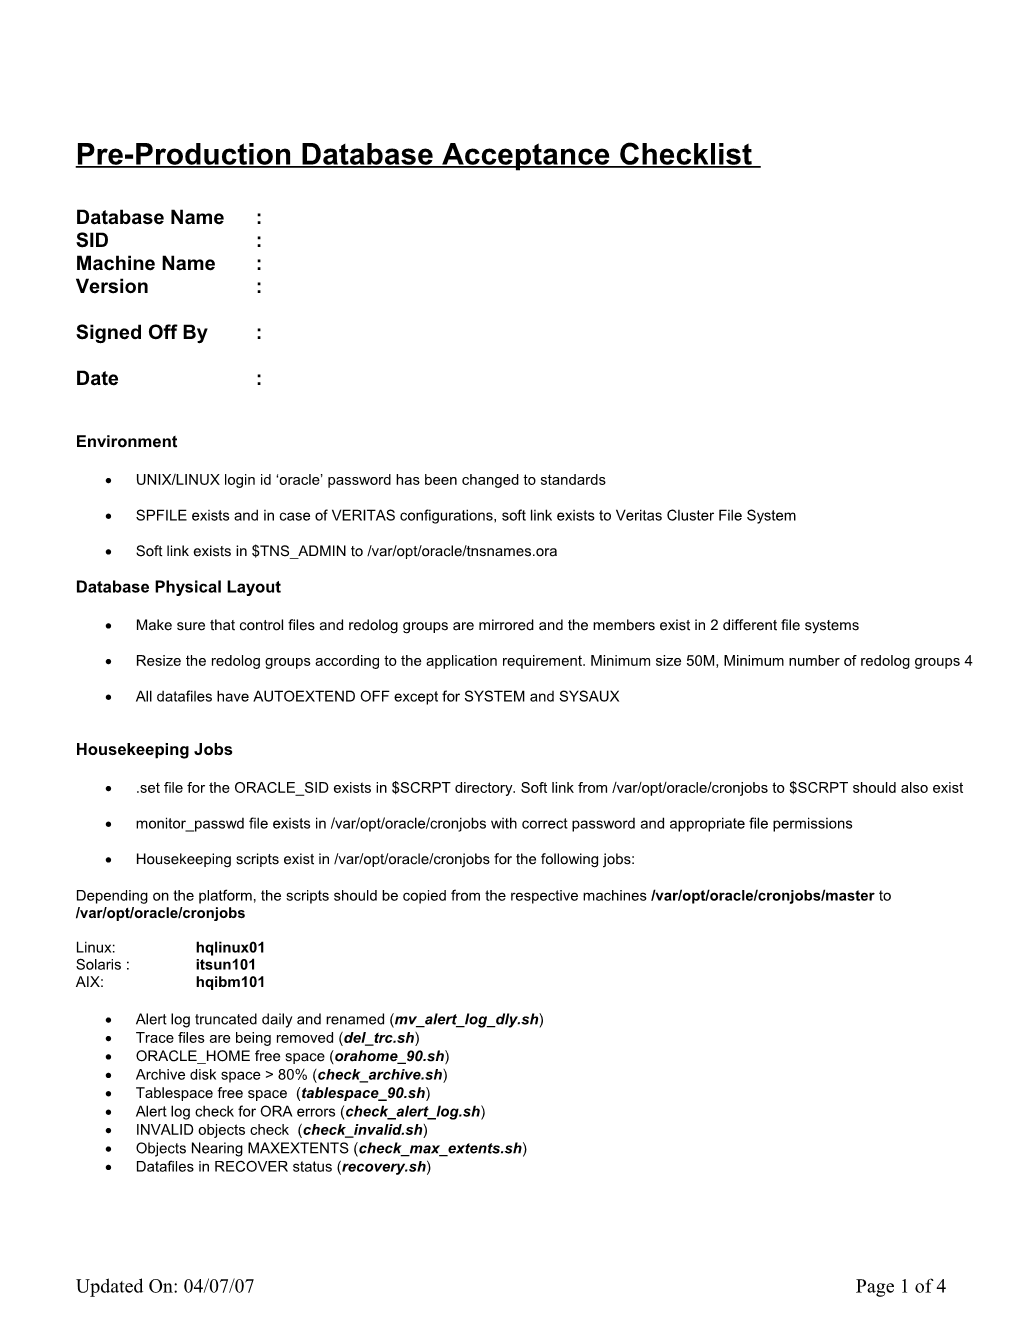 Pre-Production Acceptance Checklist